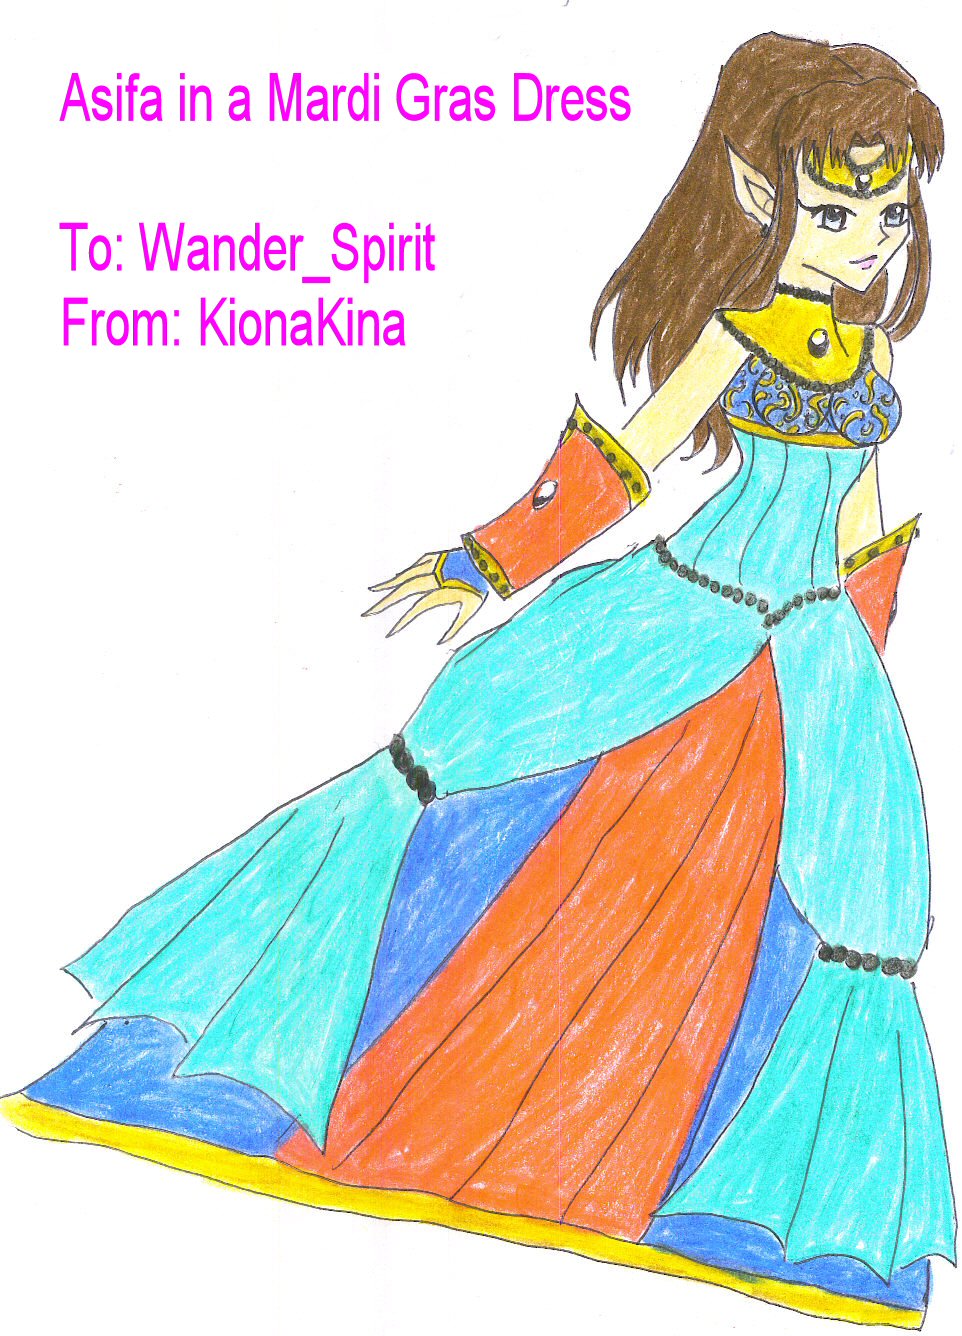 Asifa for Wandering_Spirit by KionaKina